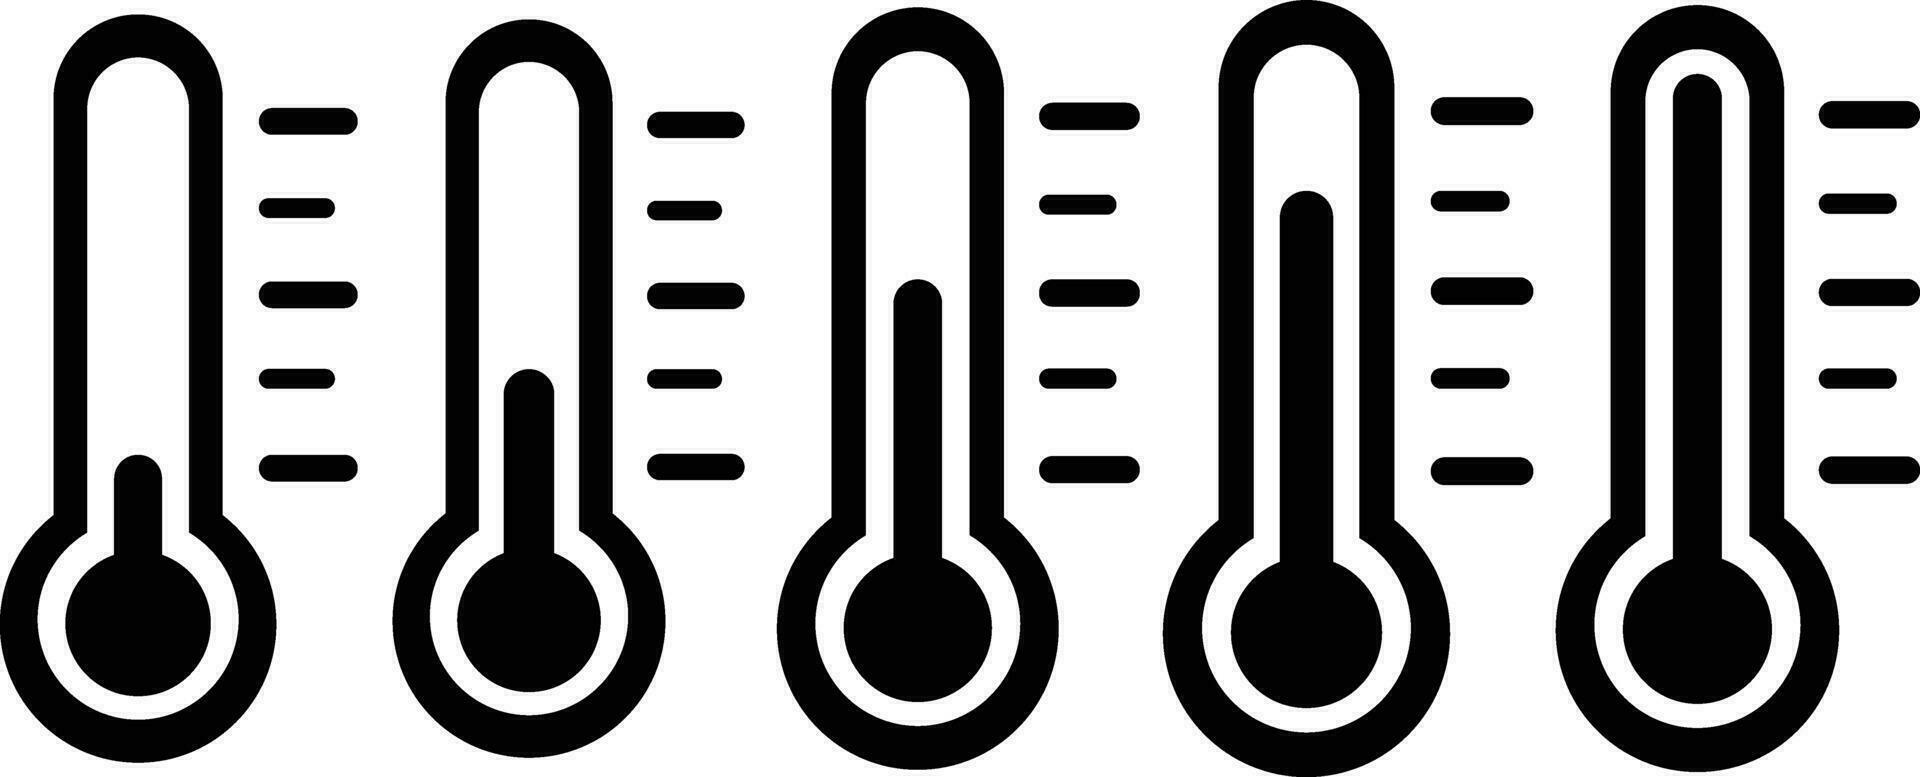 conjunto termómetro calentar frío símbolo. grupo clima instrumento signo. colección temperatura medición equipo icono. temperatura escala símbolo. soltero objeto vector